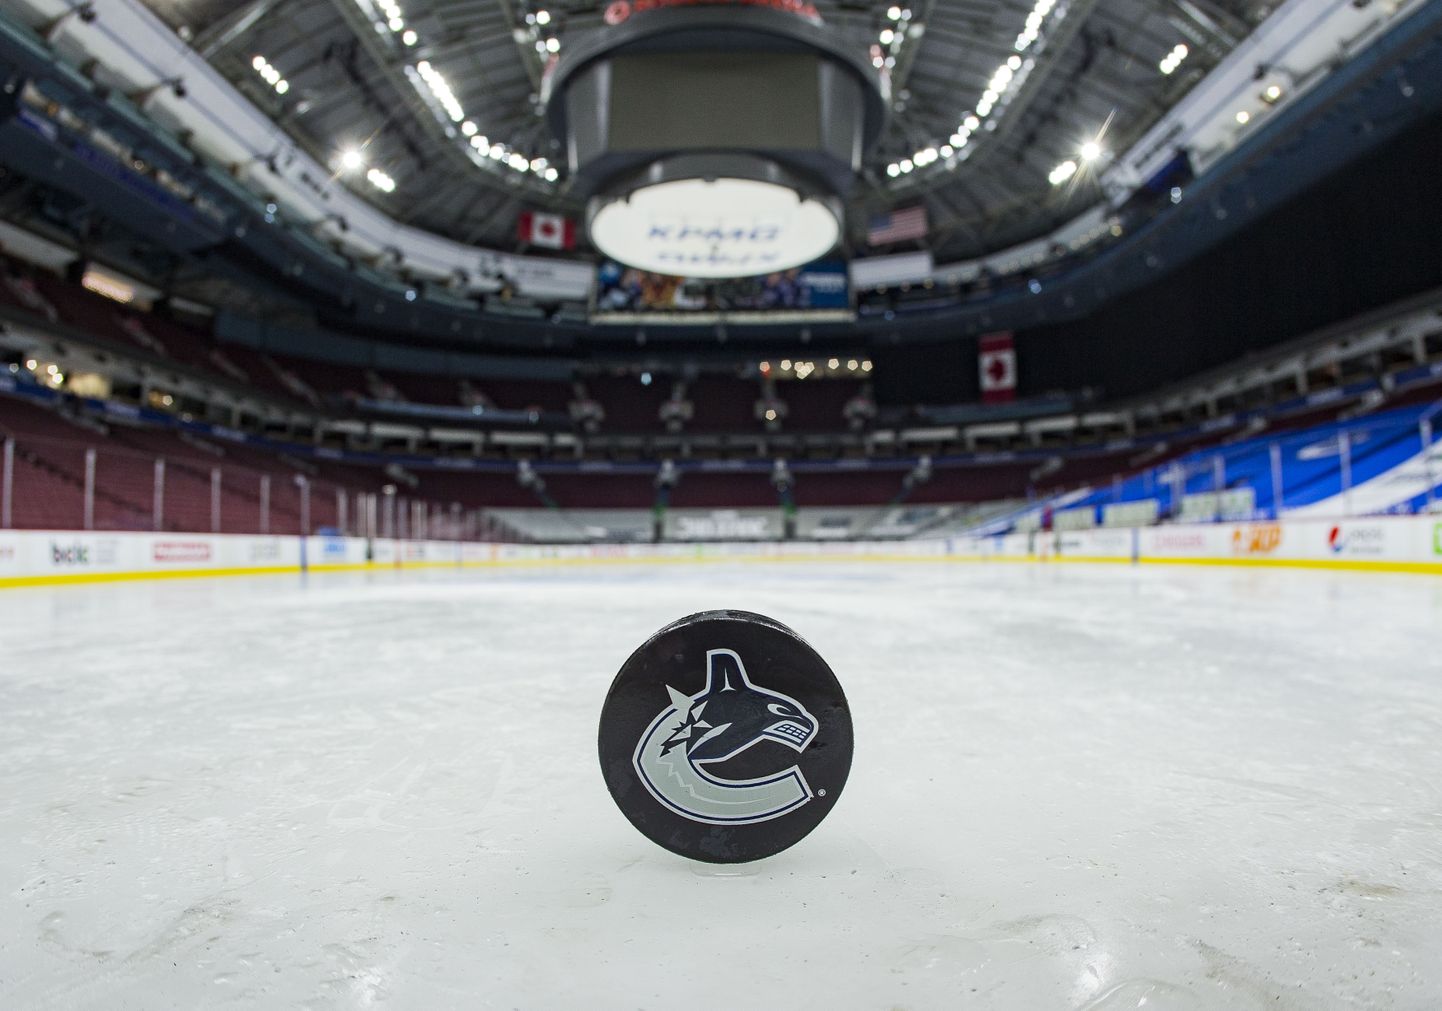 Hokeja ripa ar Vankūveras "Canucks" logo